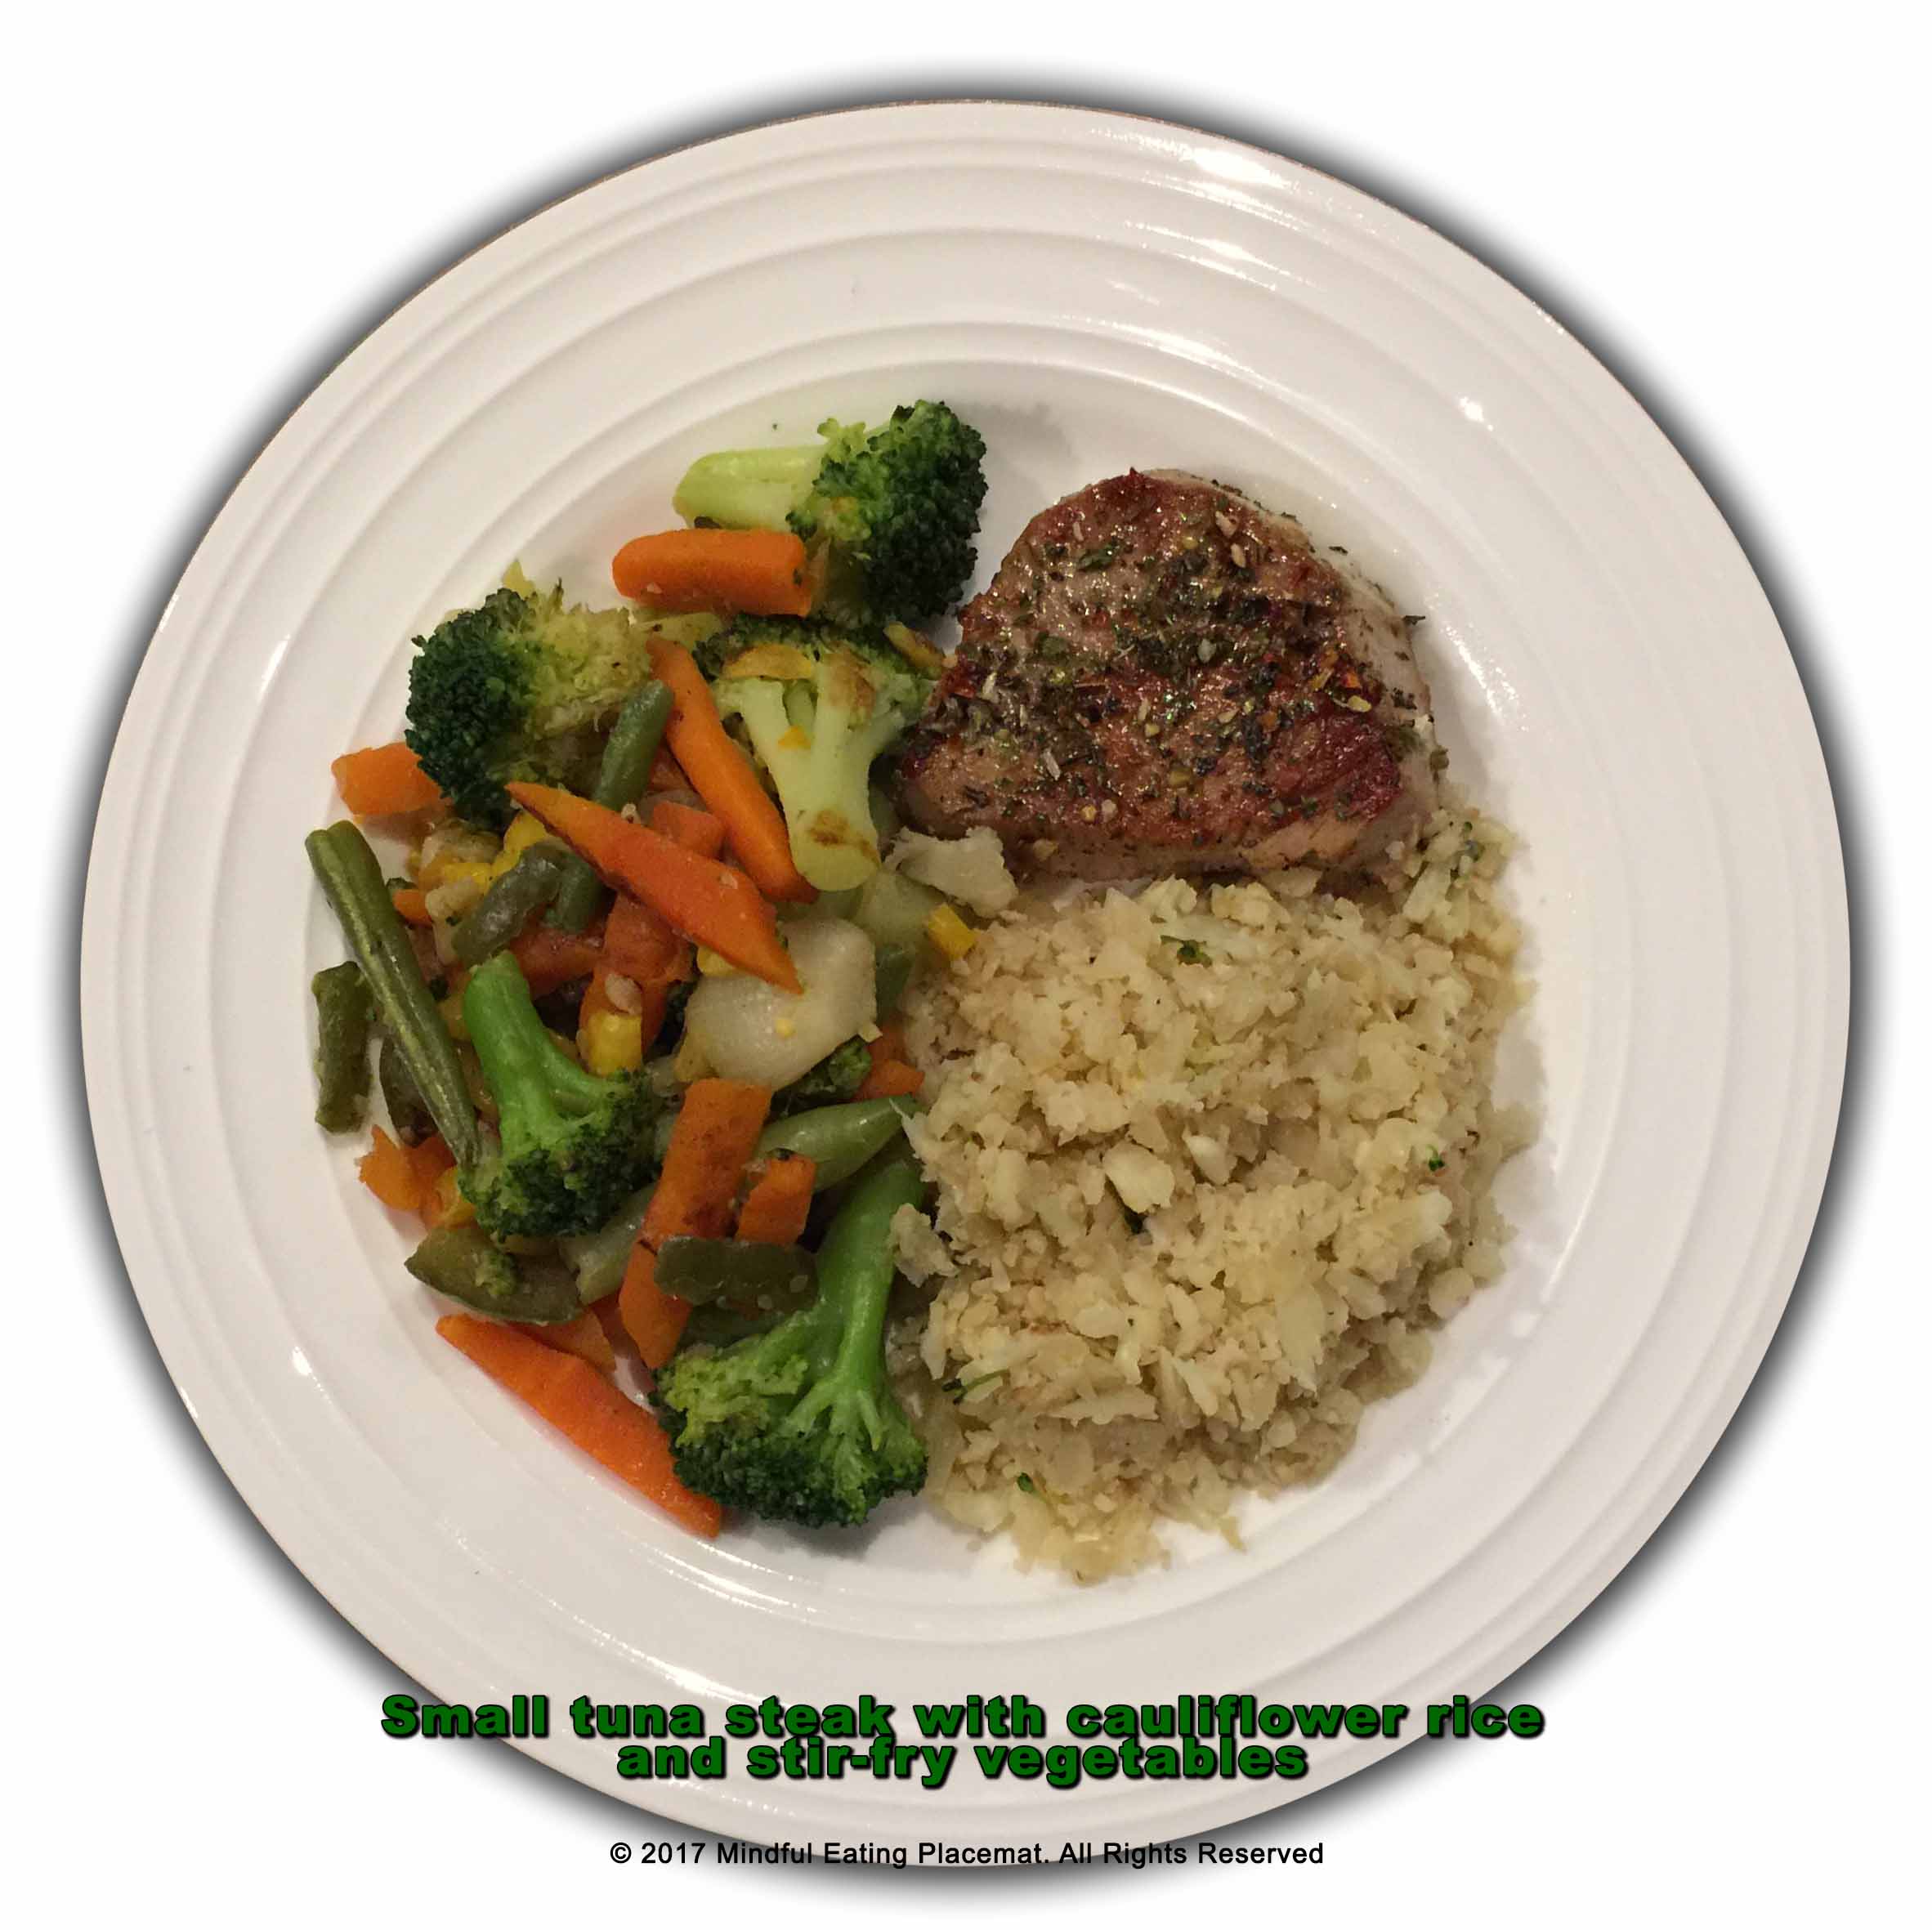 Small tuna steak with cauliflower rice and stir-fry vegetables